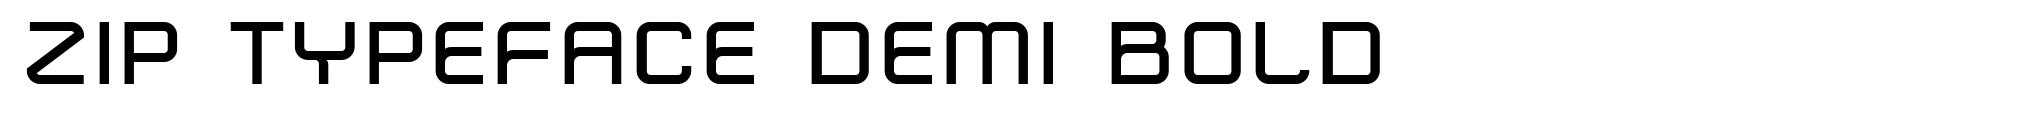 Zip Typeface Demi Bold image